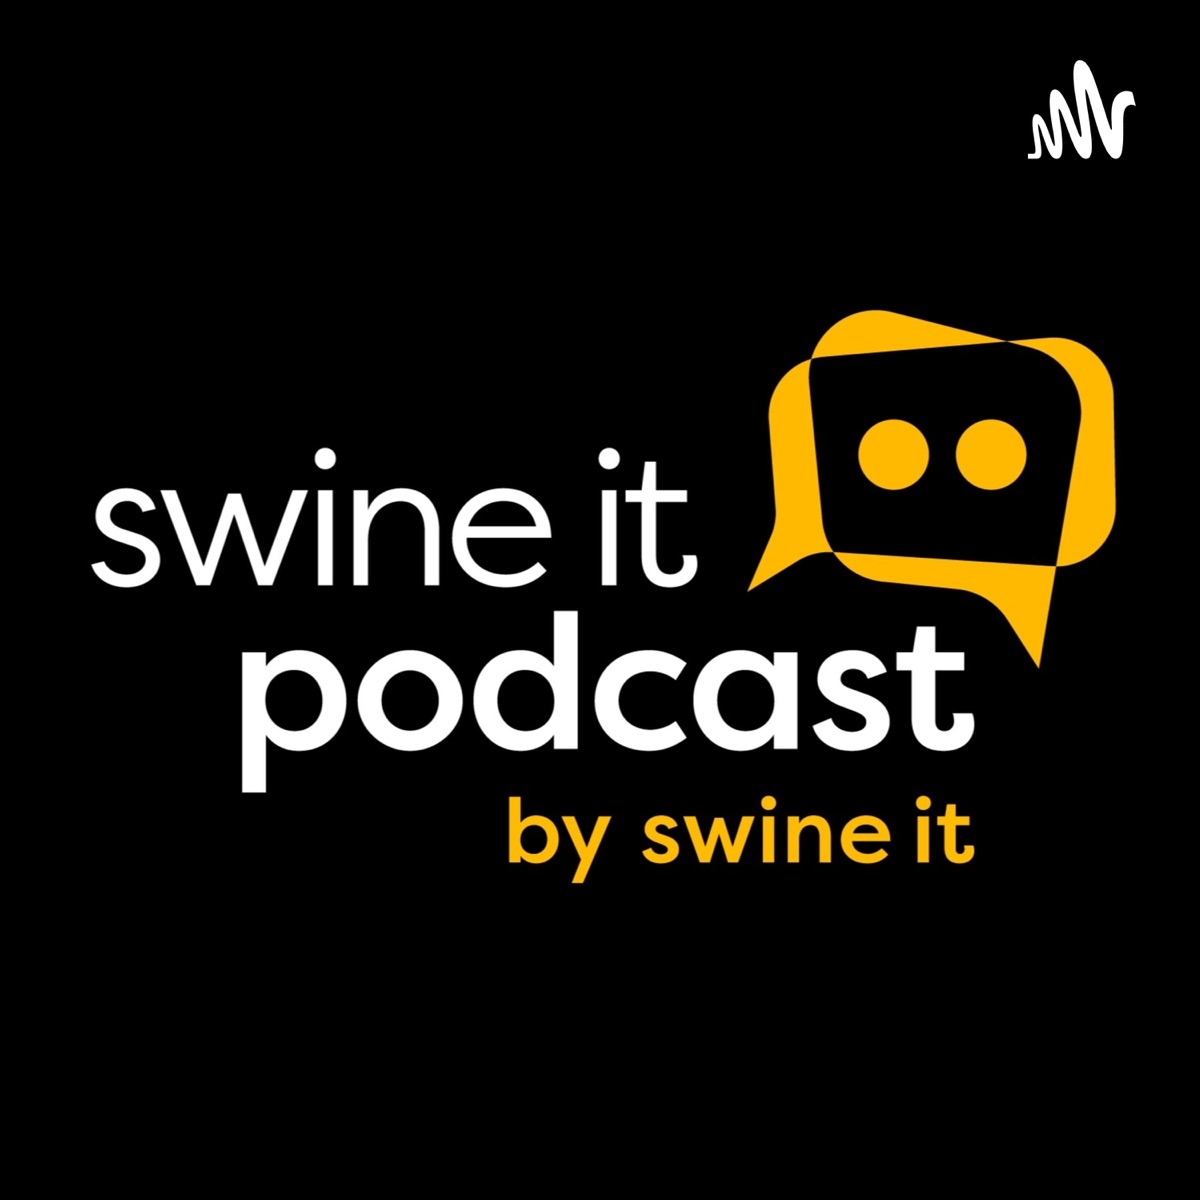 The Swine it Podcast Show